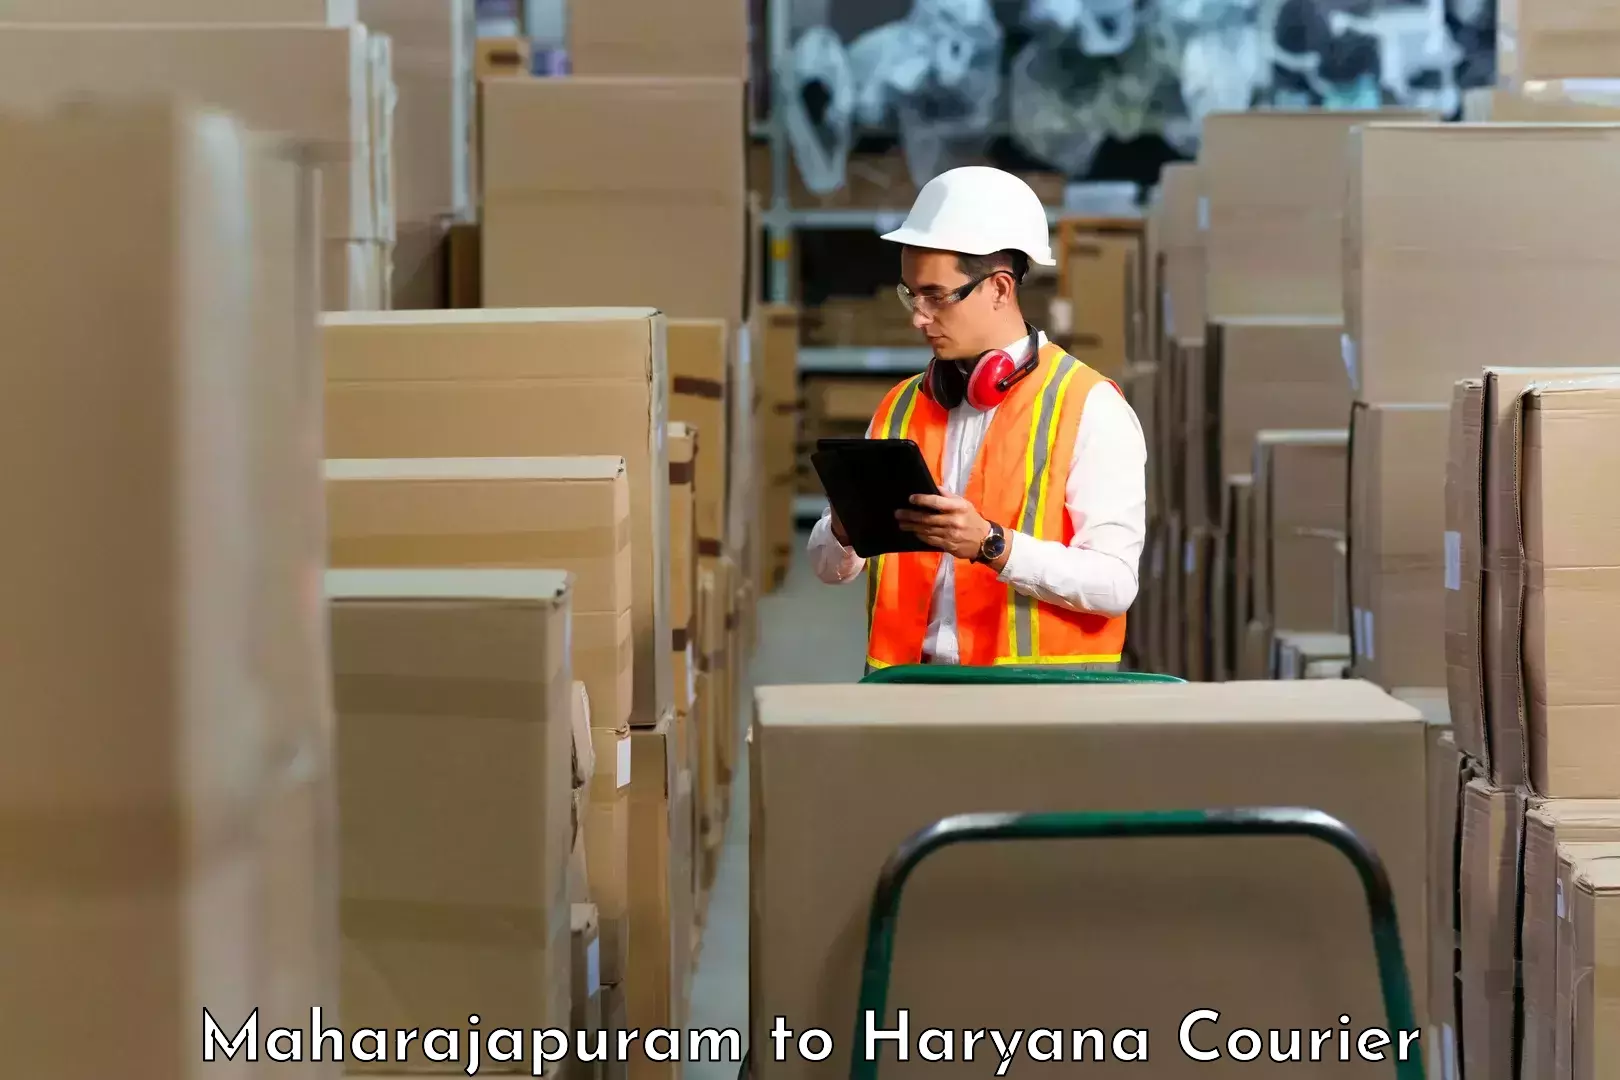 Local delivery service Maharajapuram to Charkhari